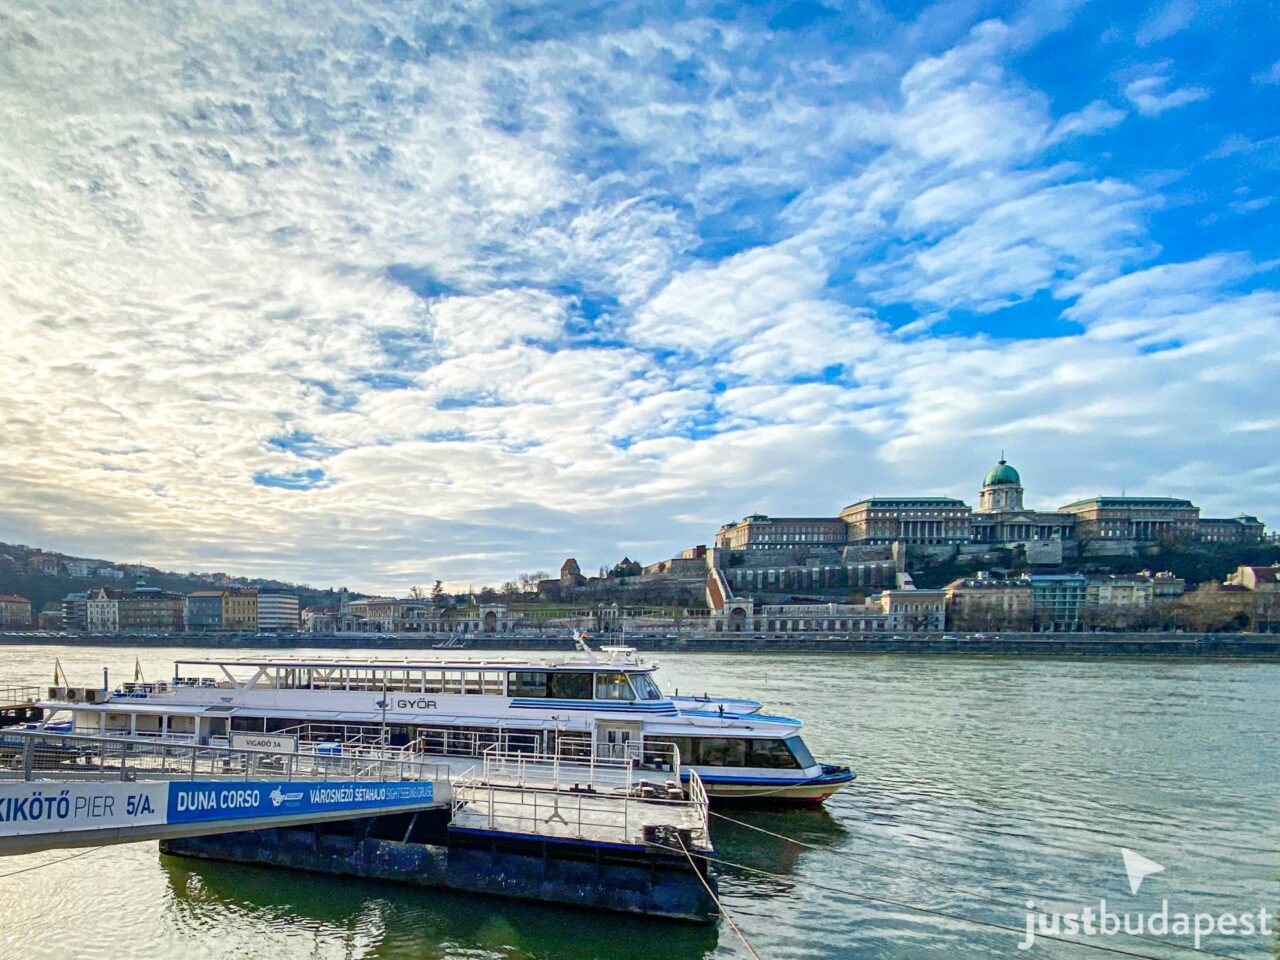 Mahart cruise on the Danube